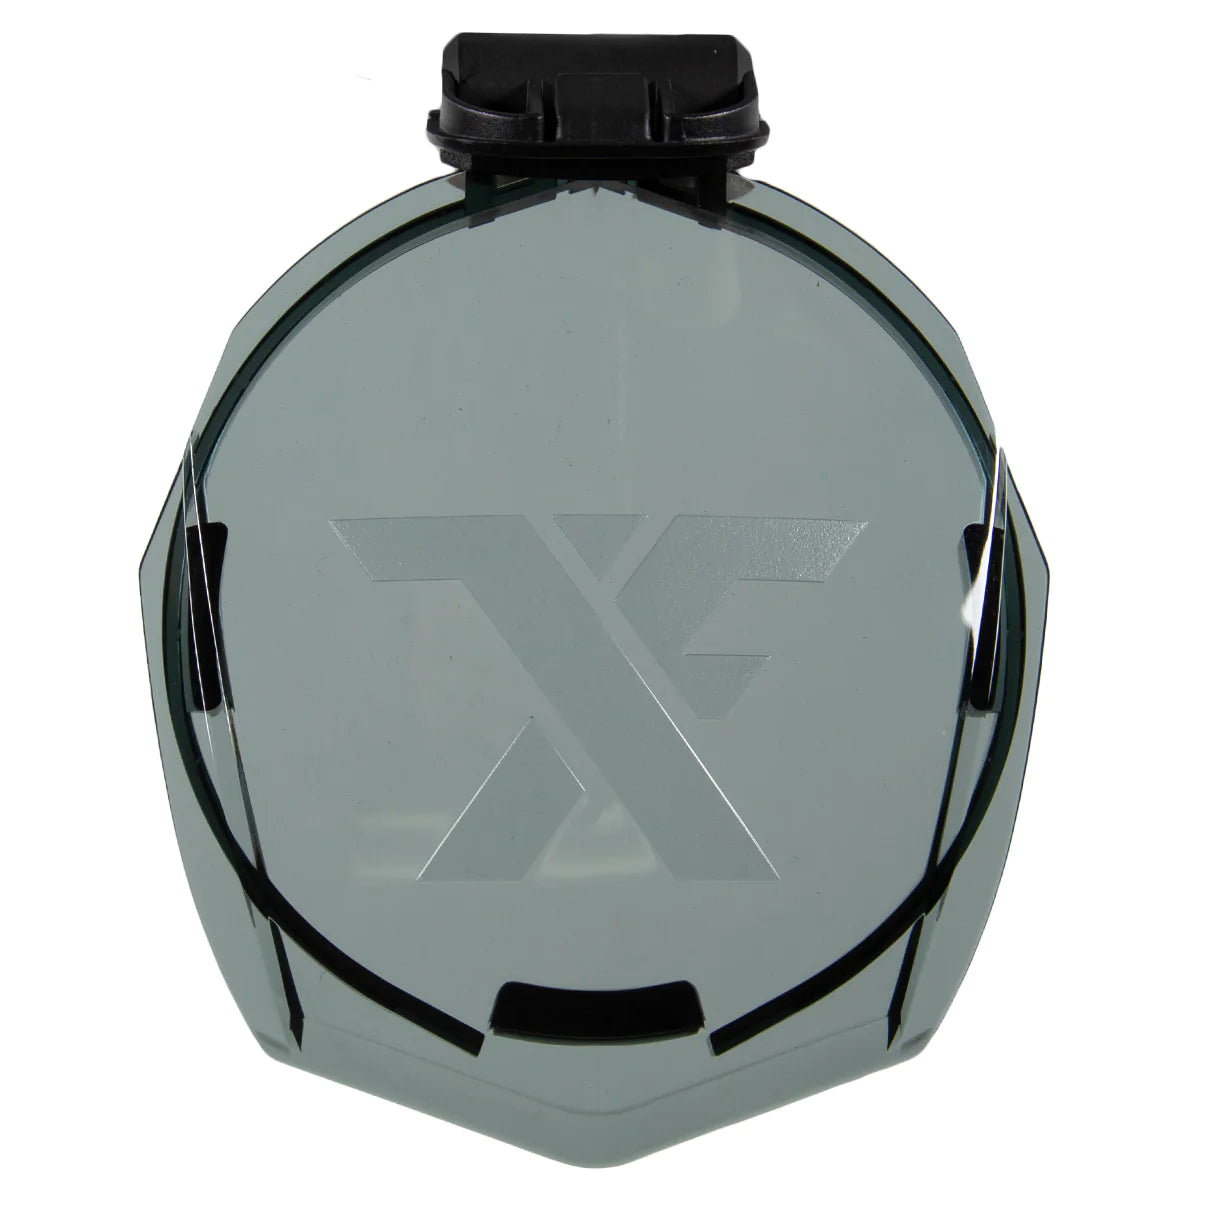 Tfx 3 Loader - Black/Neon Green | Paintball Loader Or Hopper | Hk Army